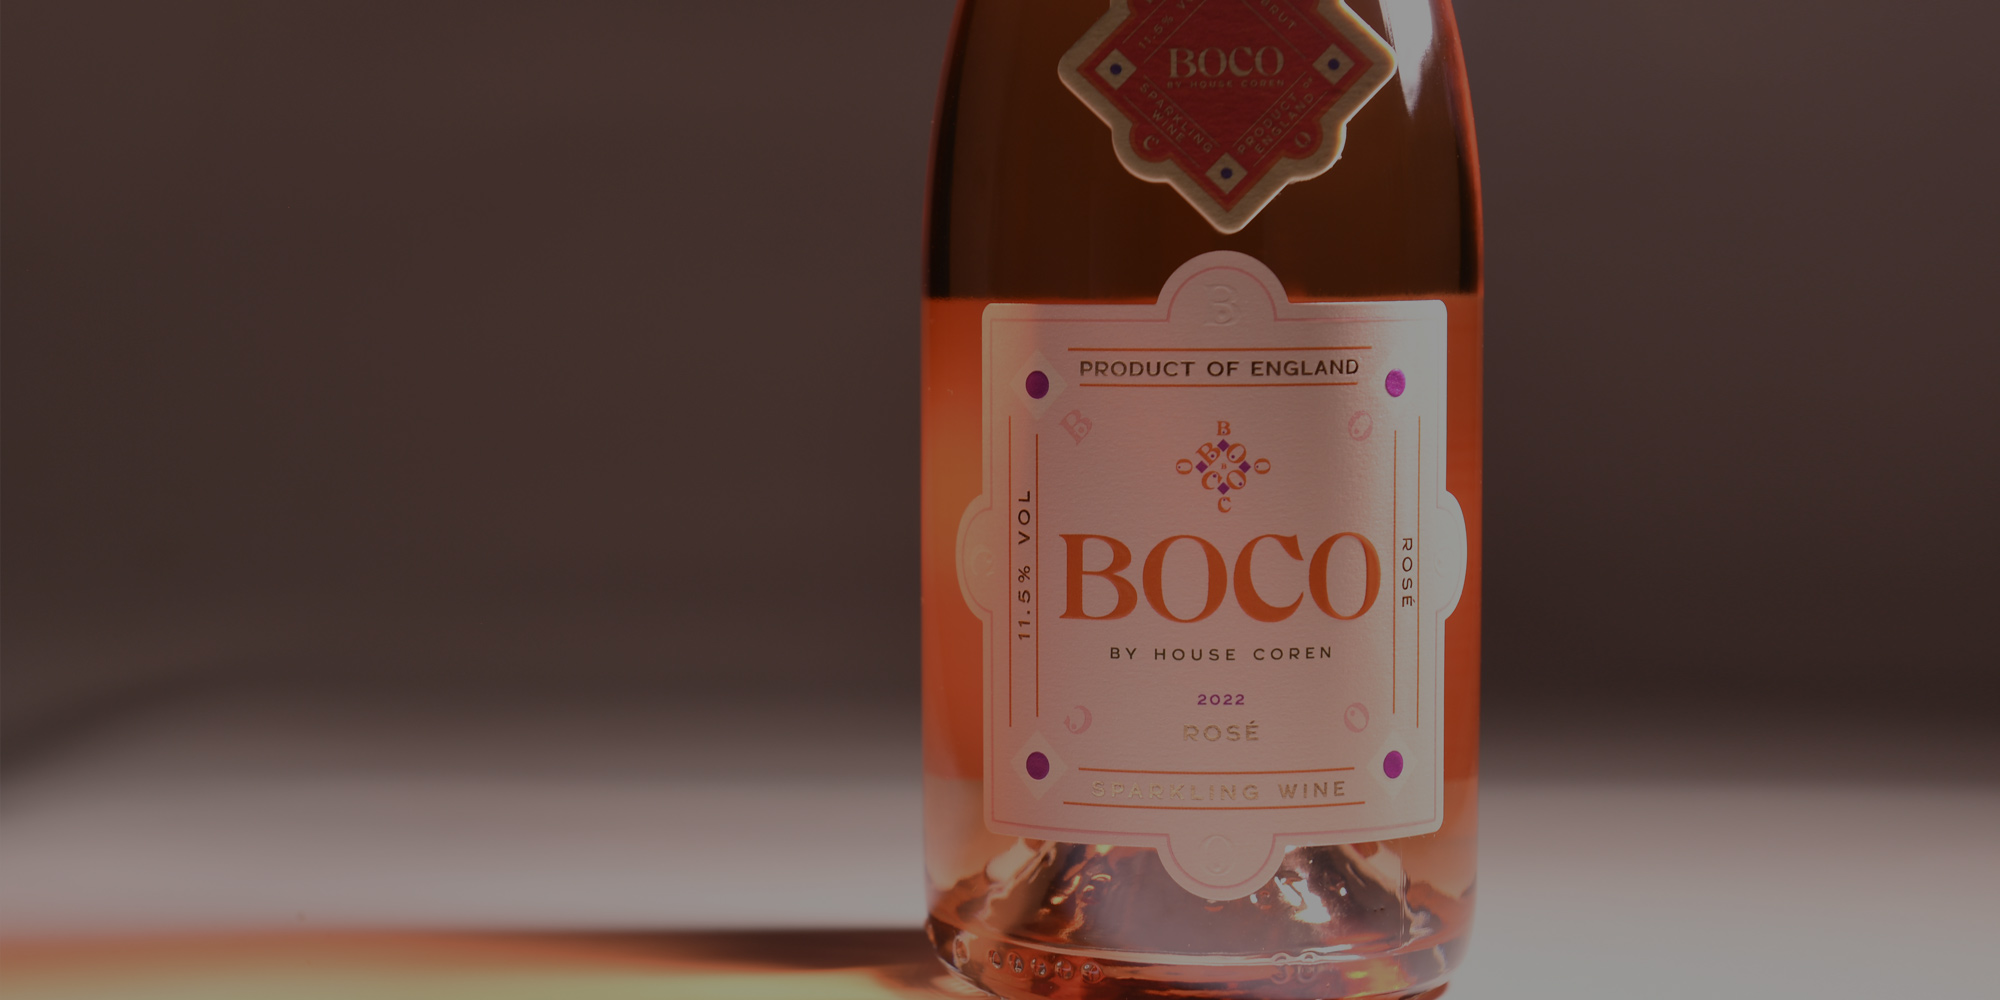 House Coren vineyard, winery, négociant West Sussex. Producers of Boco rosé sparkling wine.